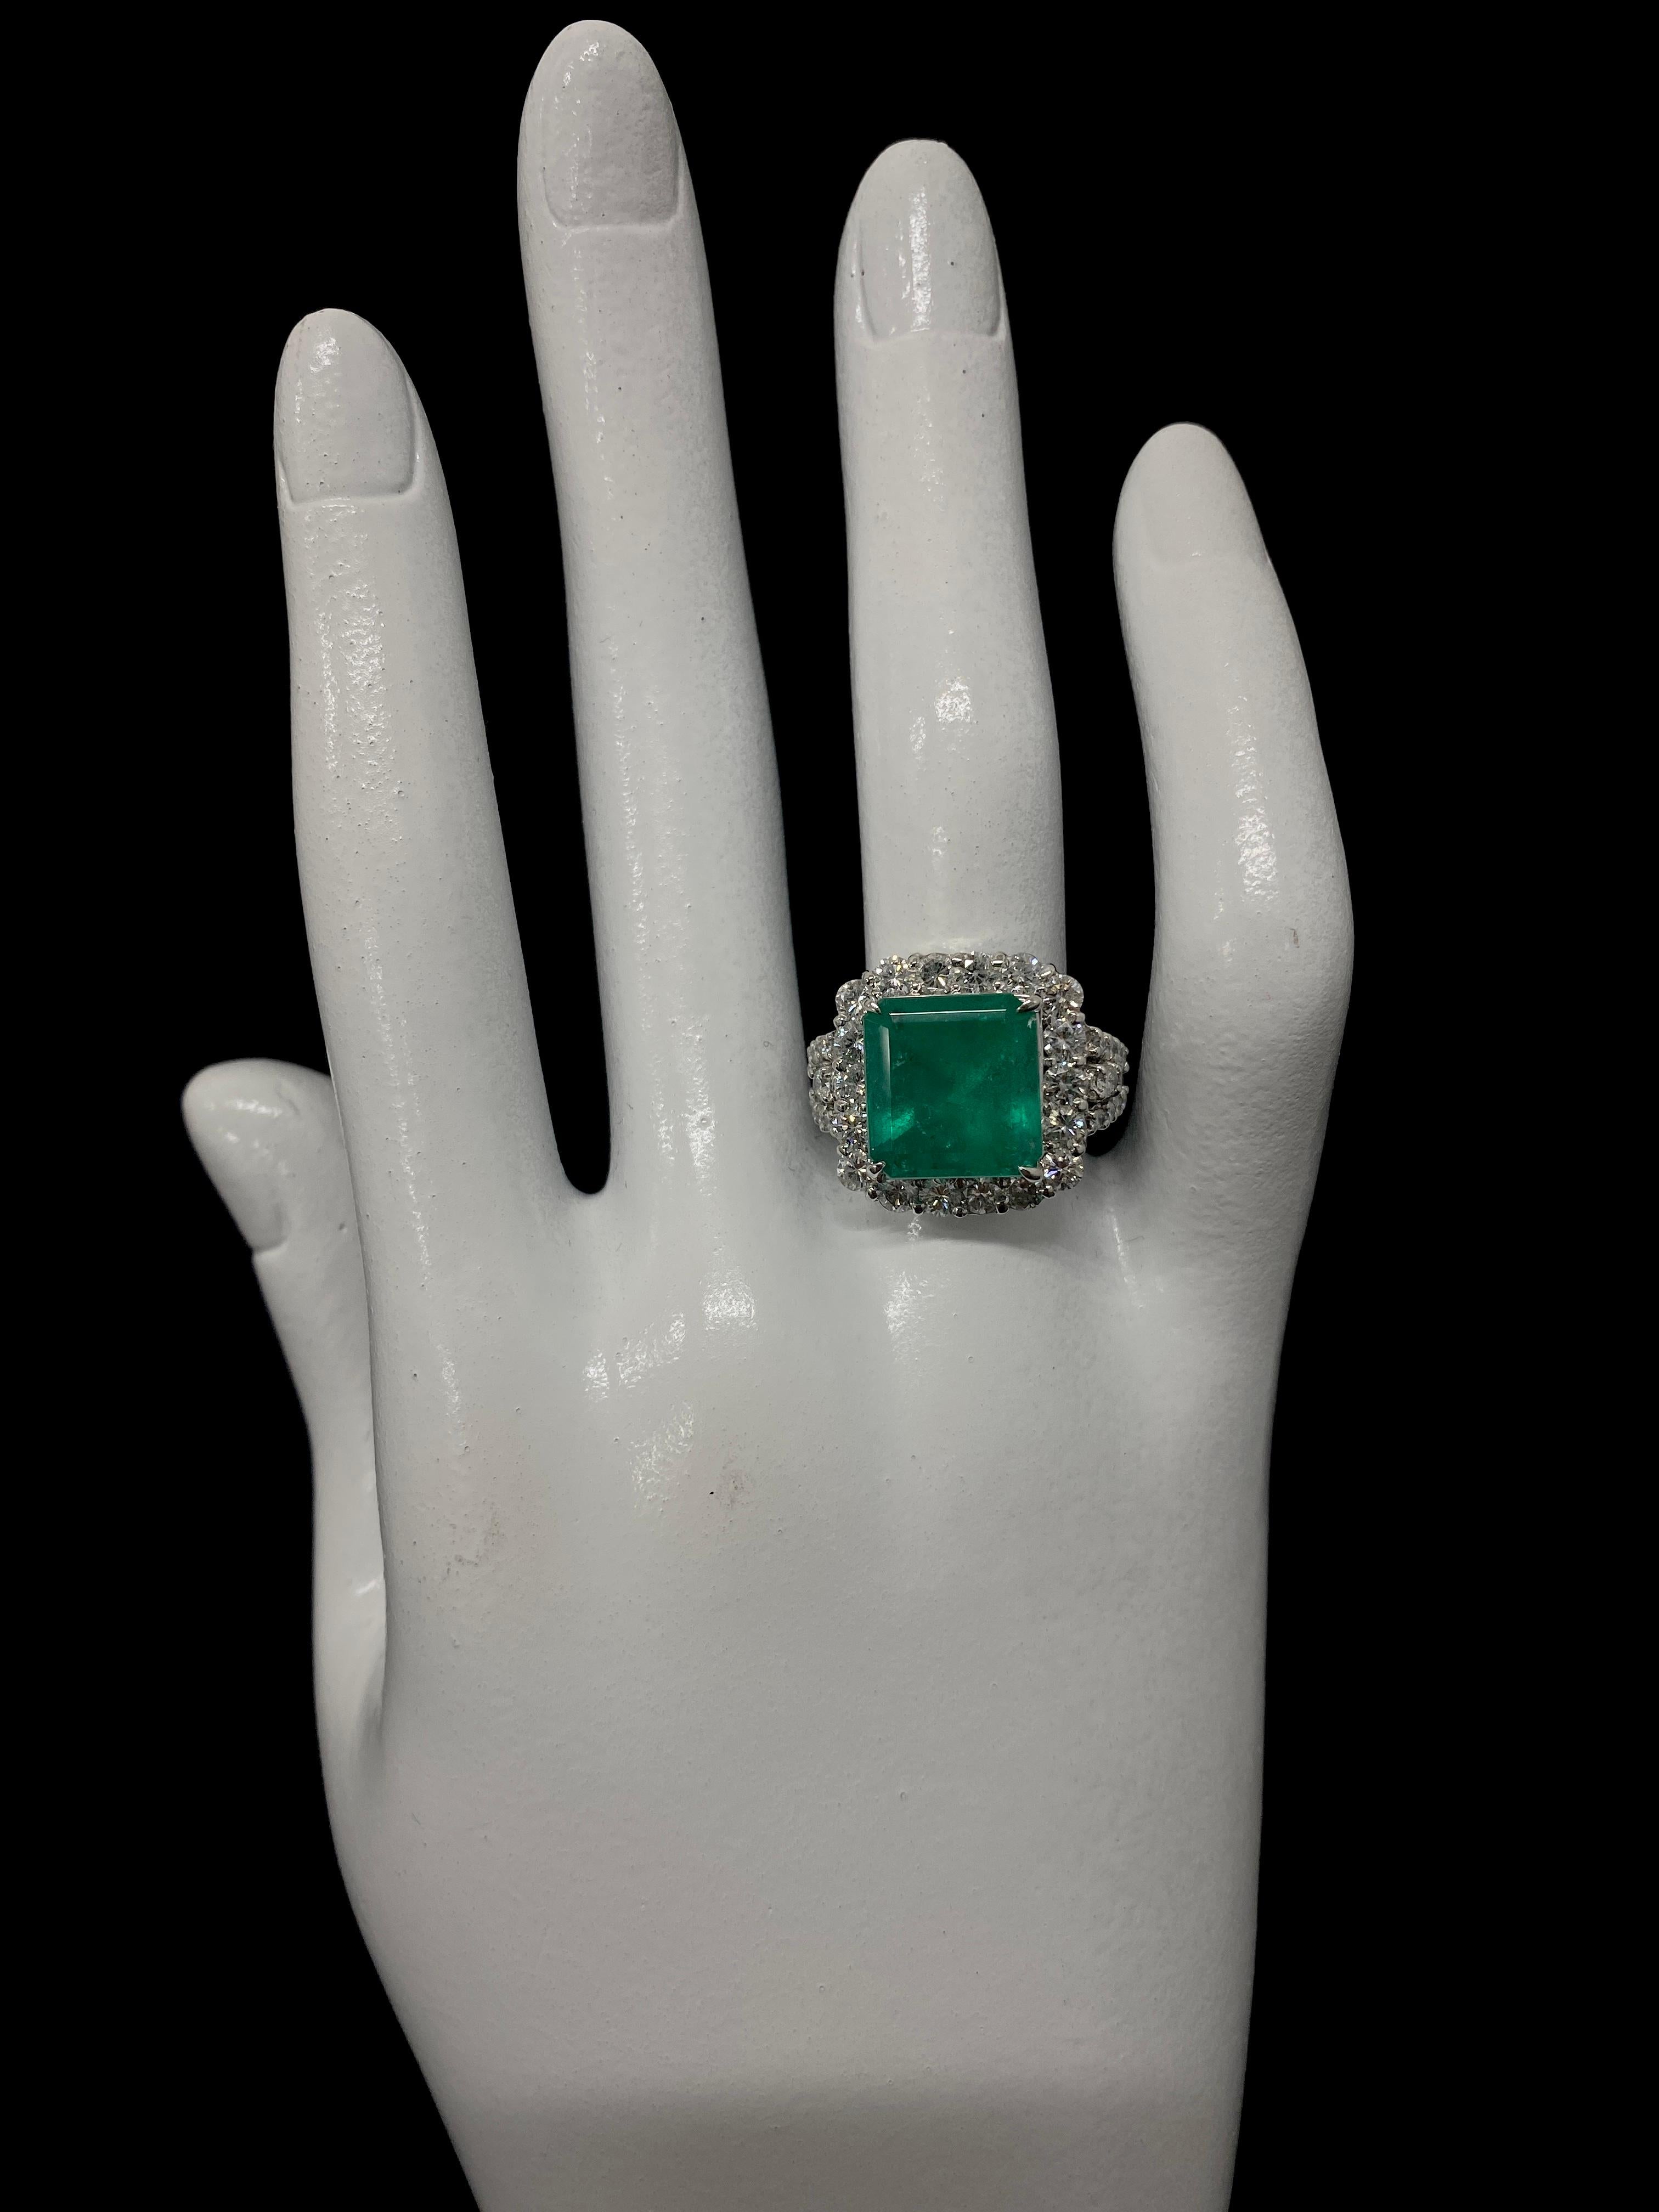 Women's 6.57 Carat Natural Emerald and Diamond Cocktail Ring Set in Platinum